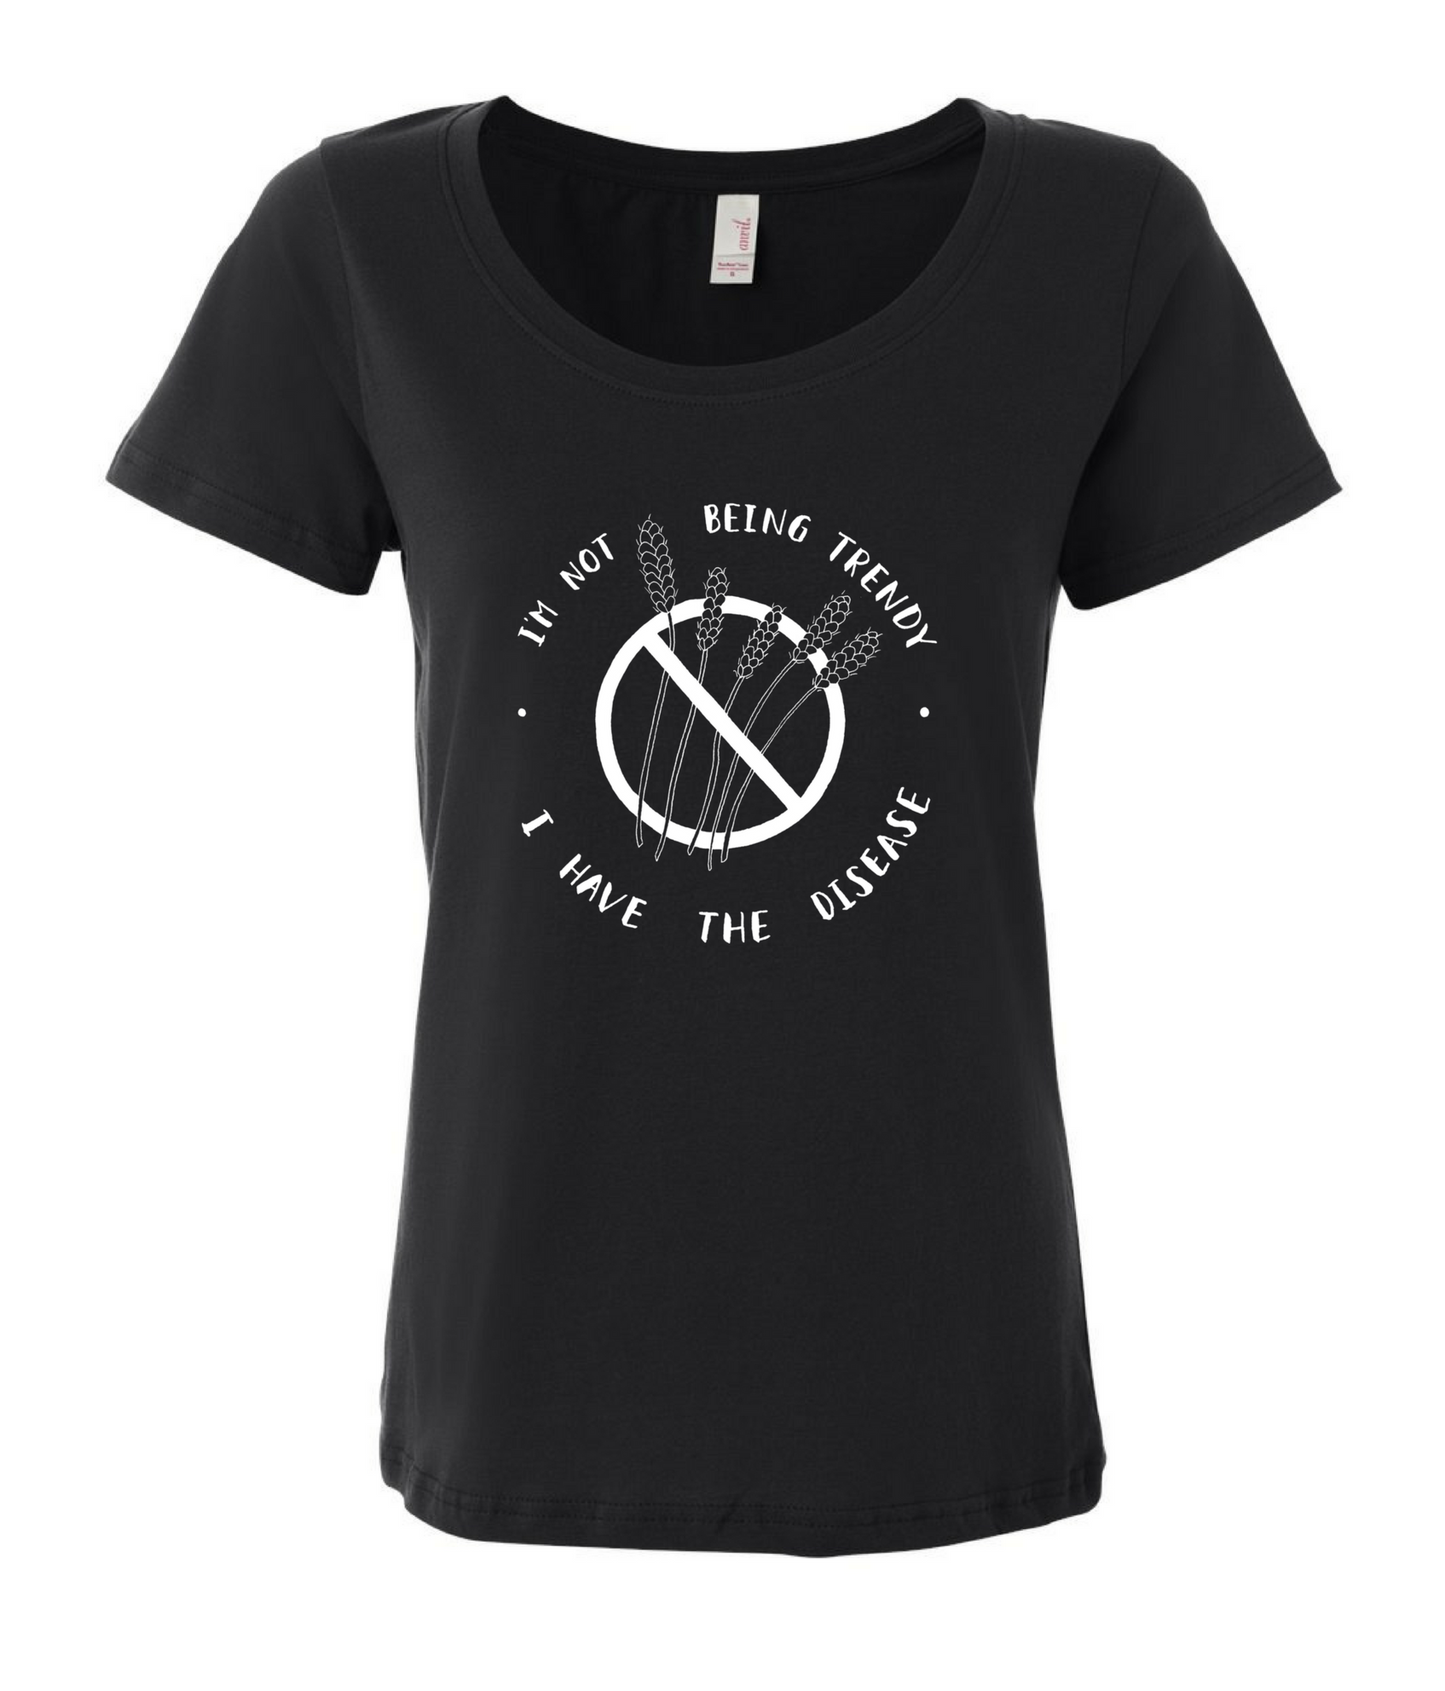 "I'm Not Being Trendy" - Women's Black T-shirt for Celiacs